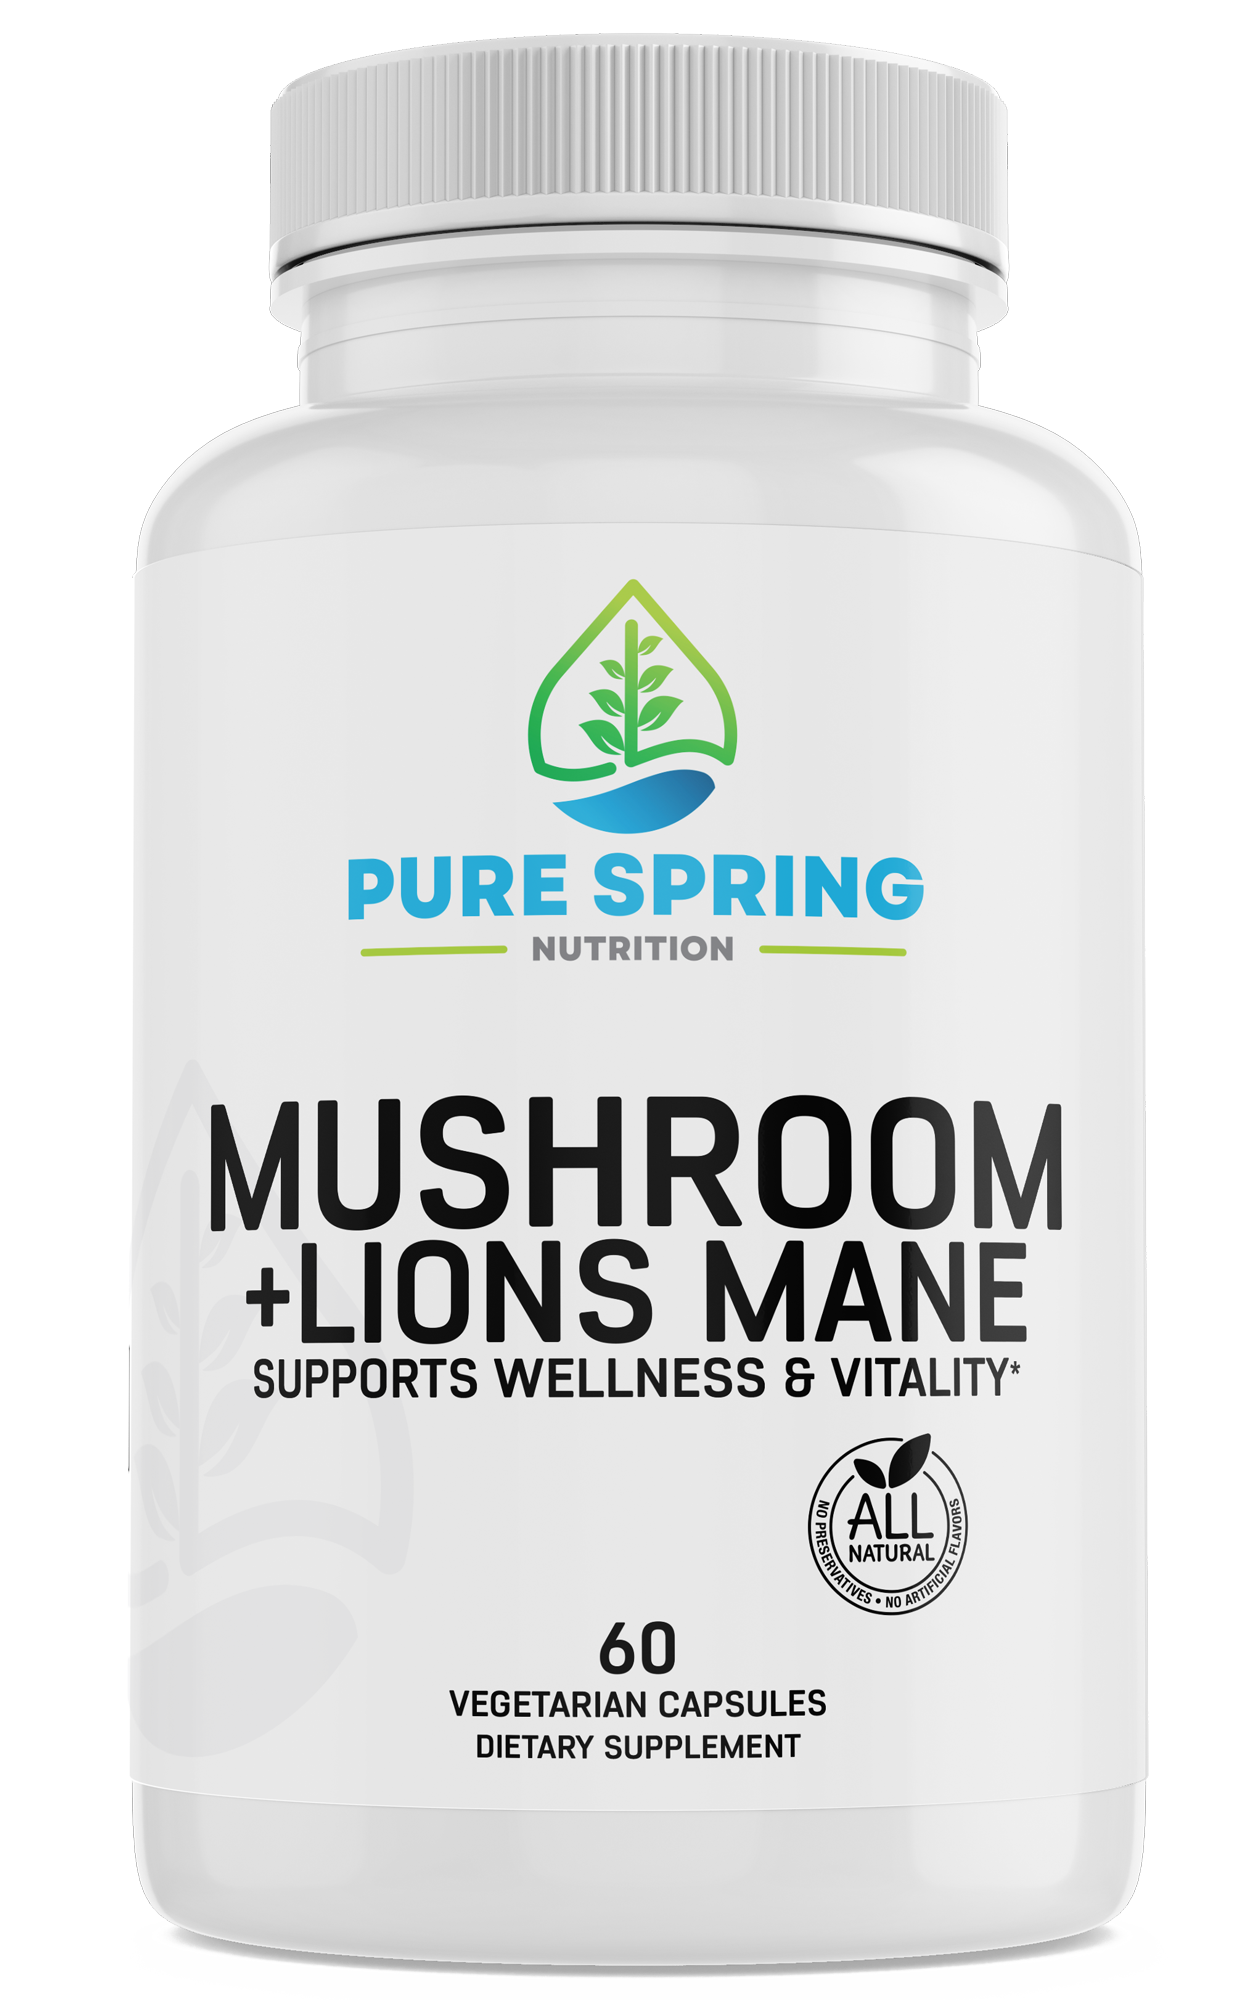 Mushroom + Lions Mane